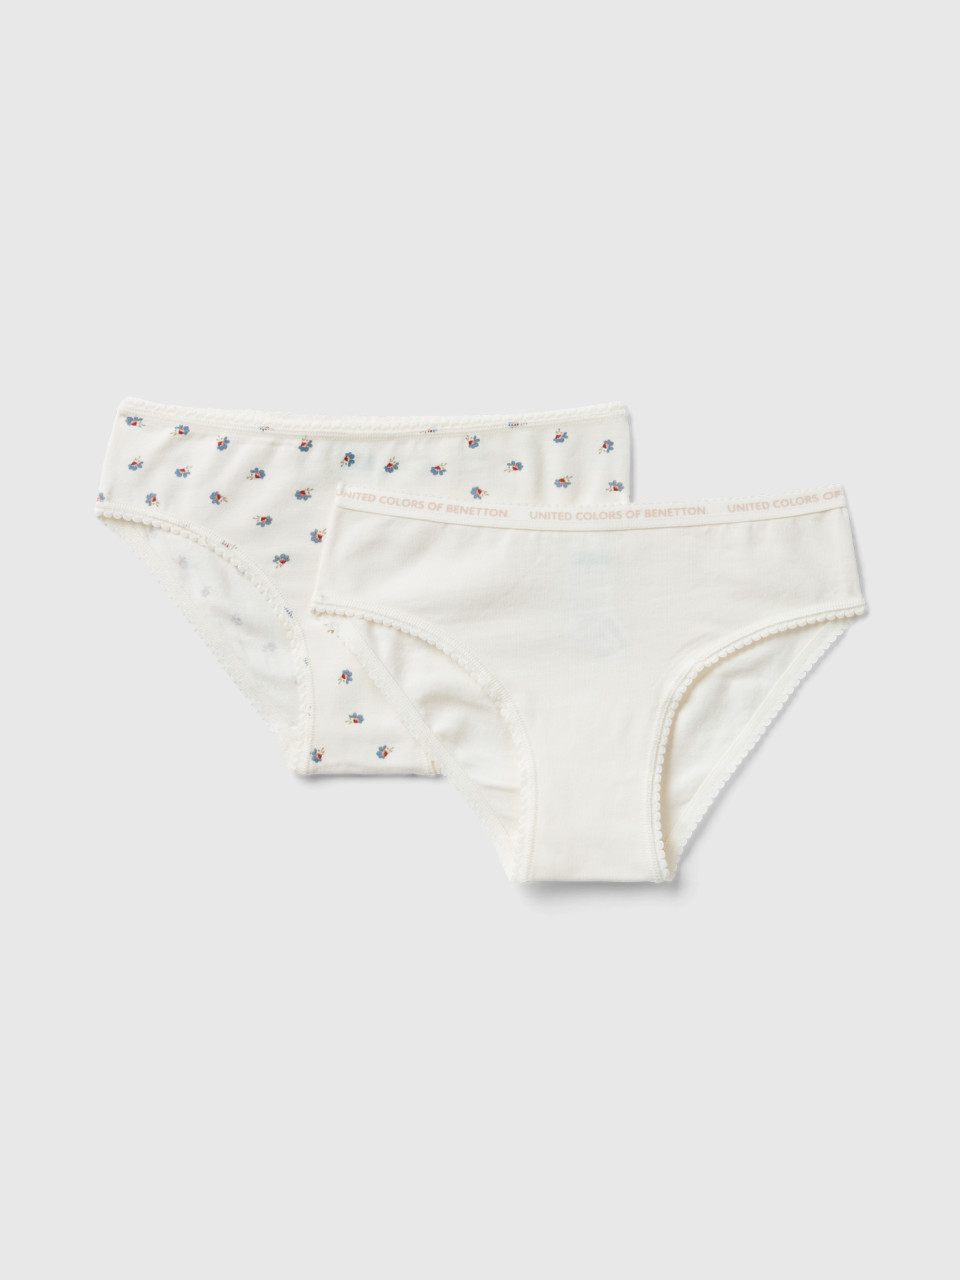 Benetton, Set Of Two Pairs Of Underwear In Stretch Cotton, Creamy White, Kids